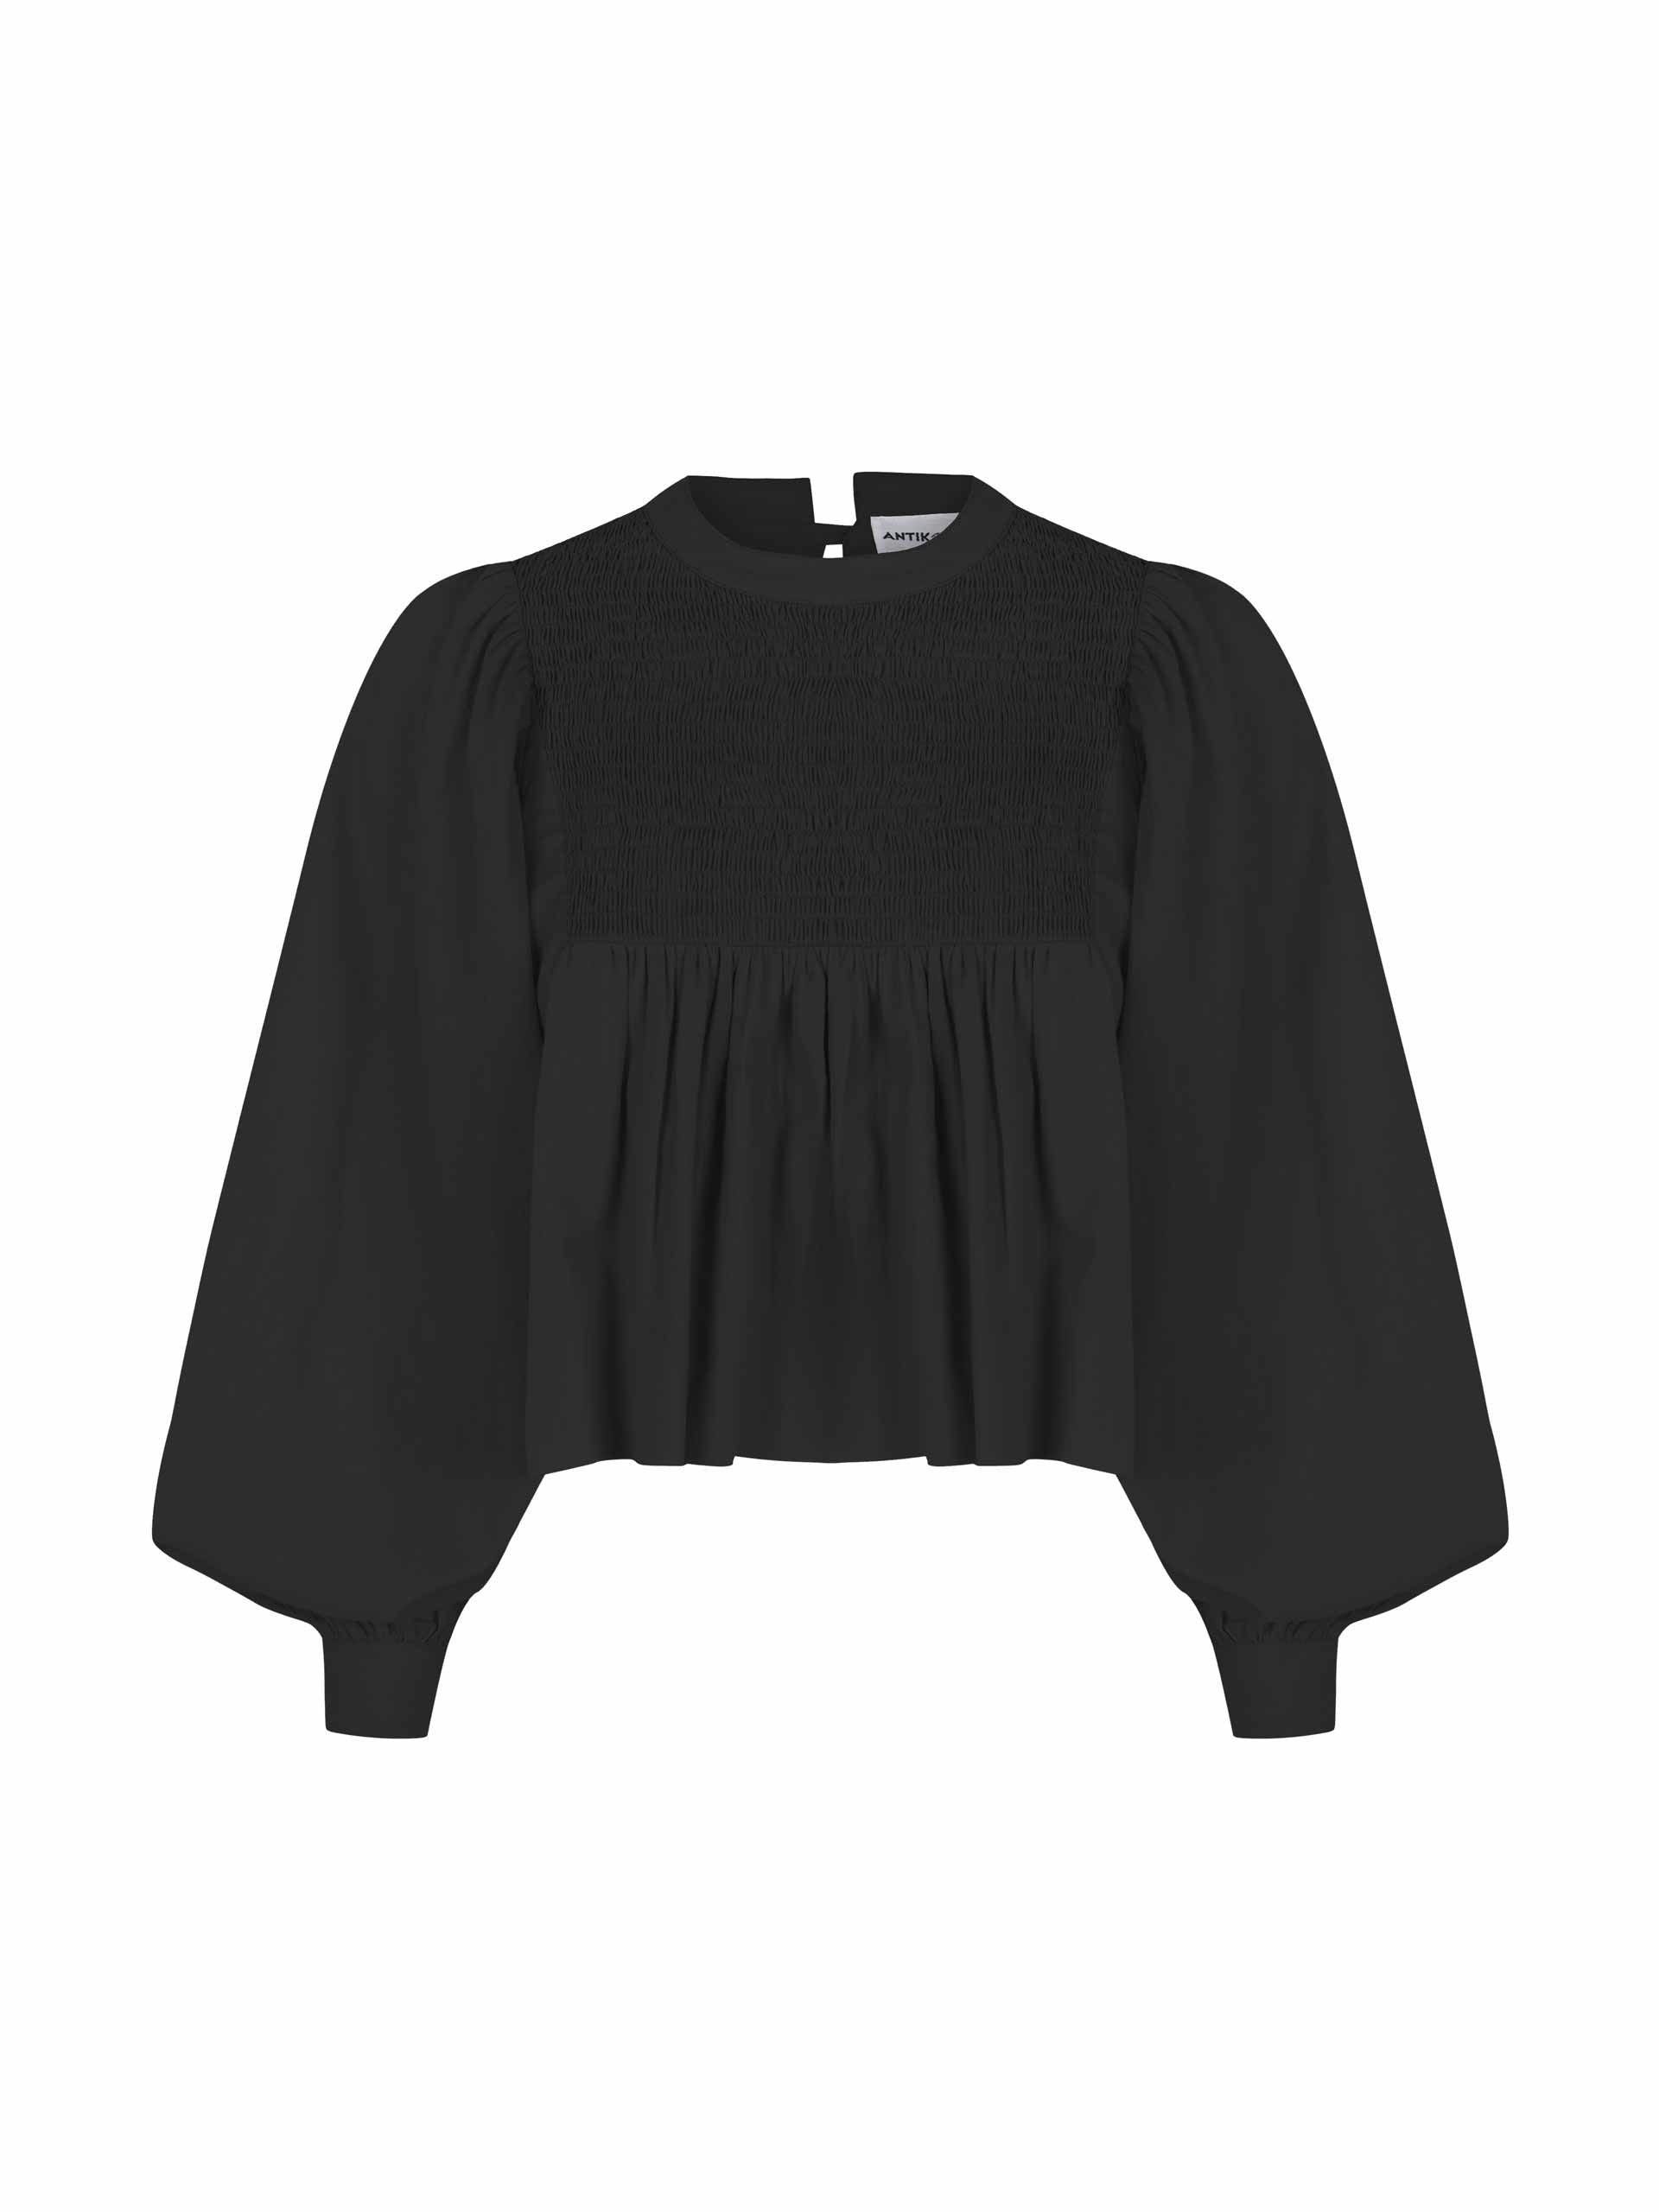 Black cropped blouse